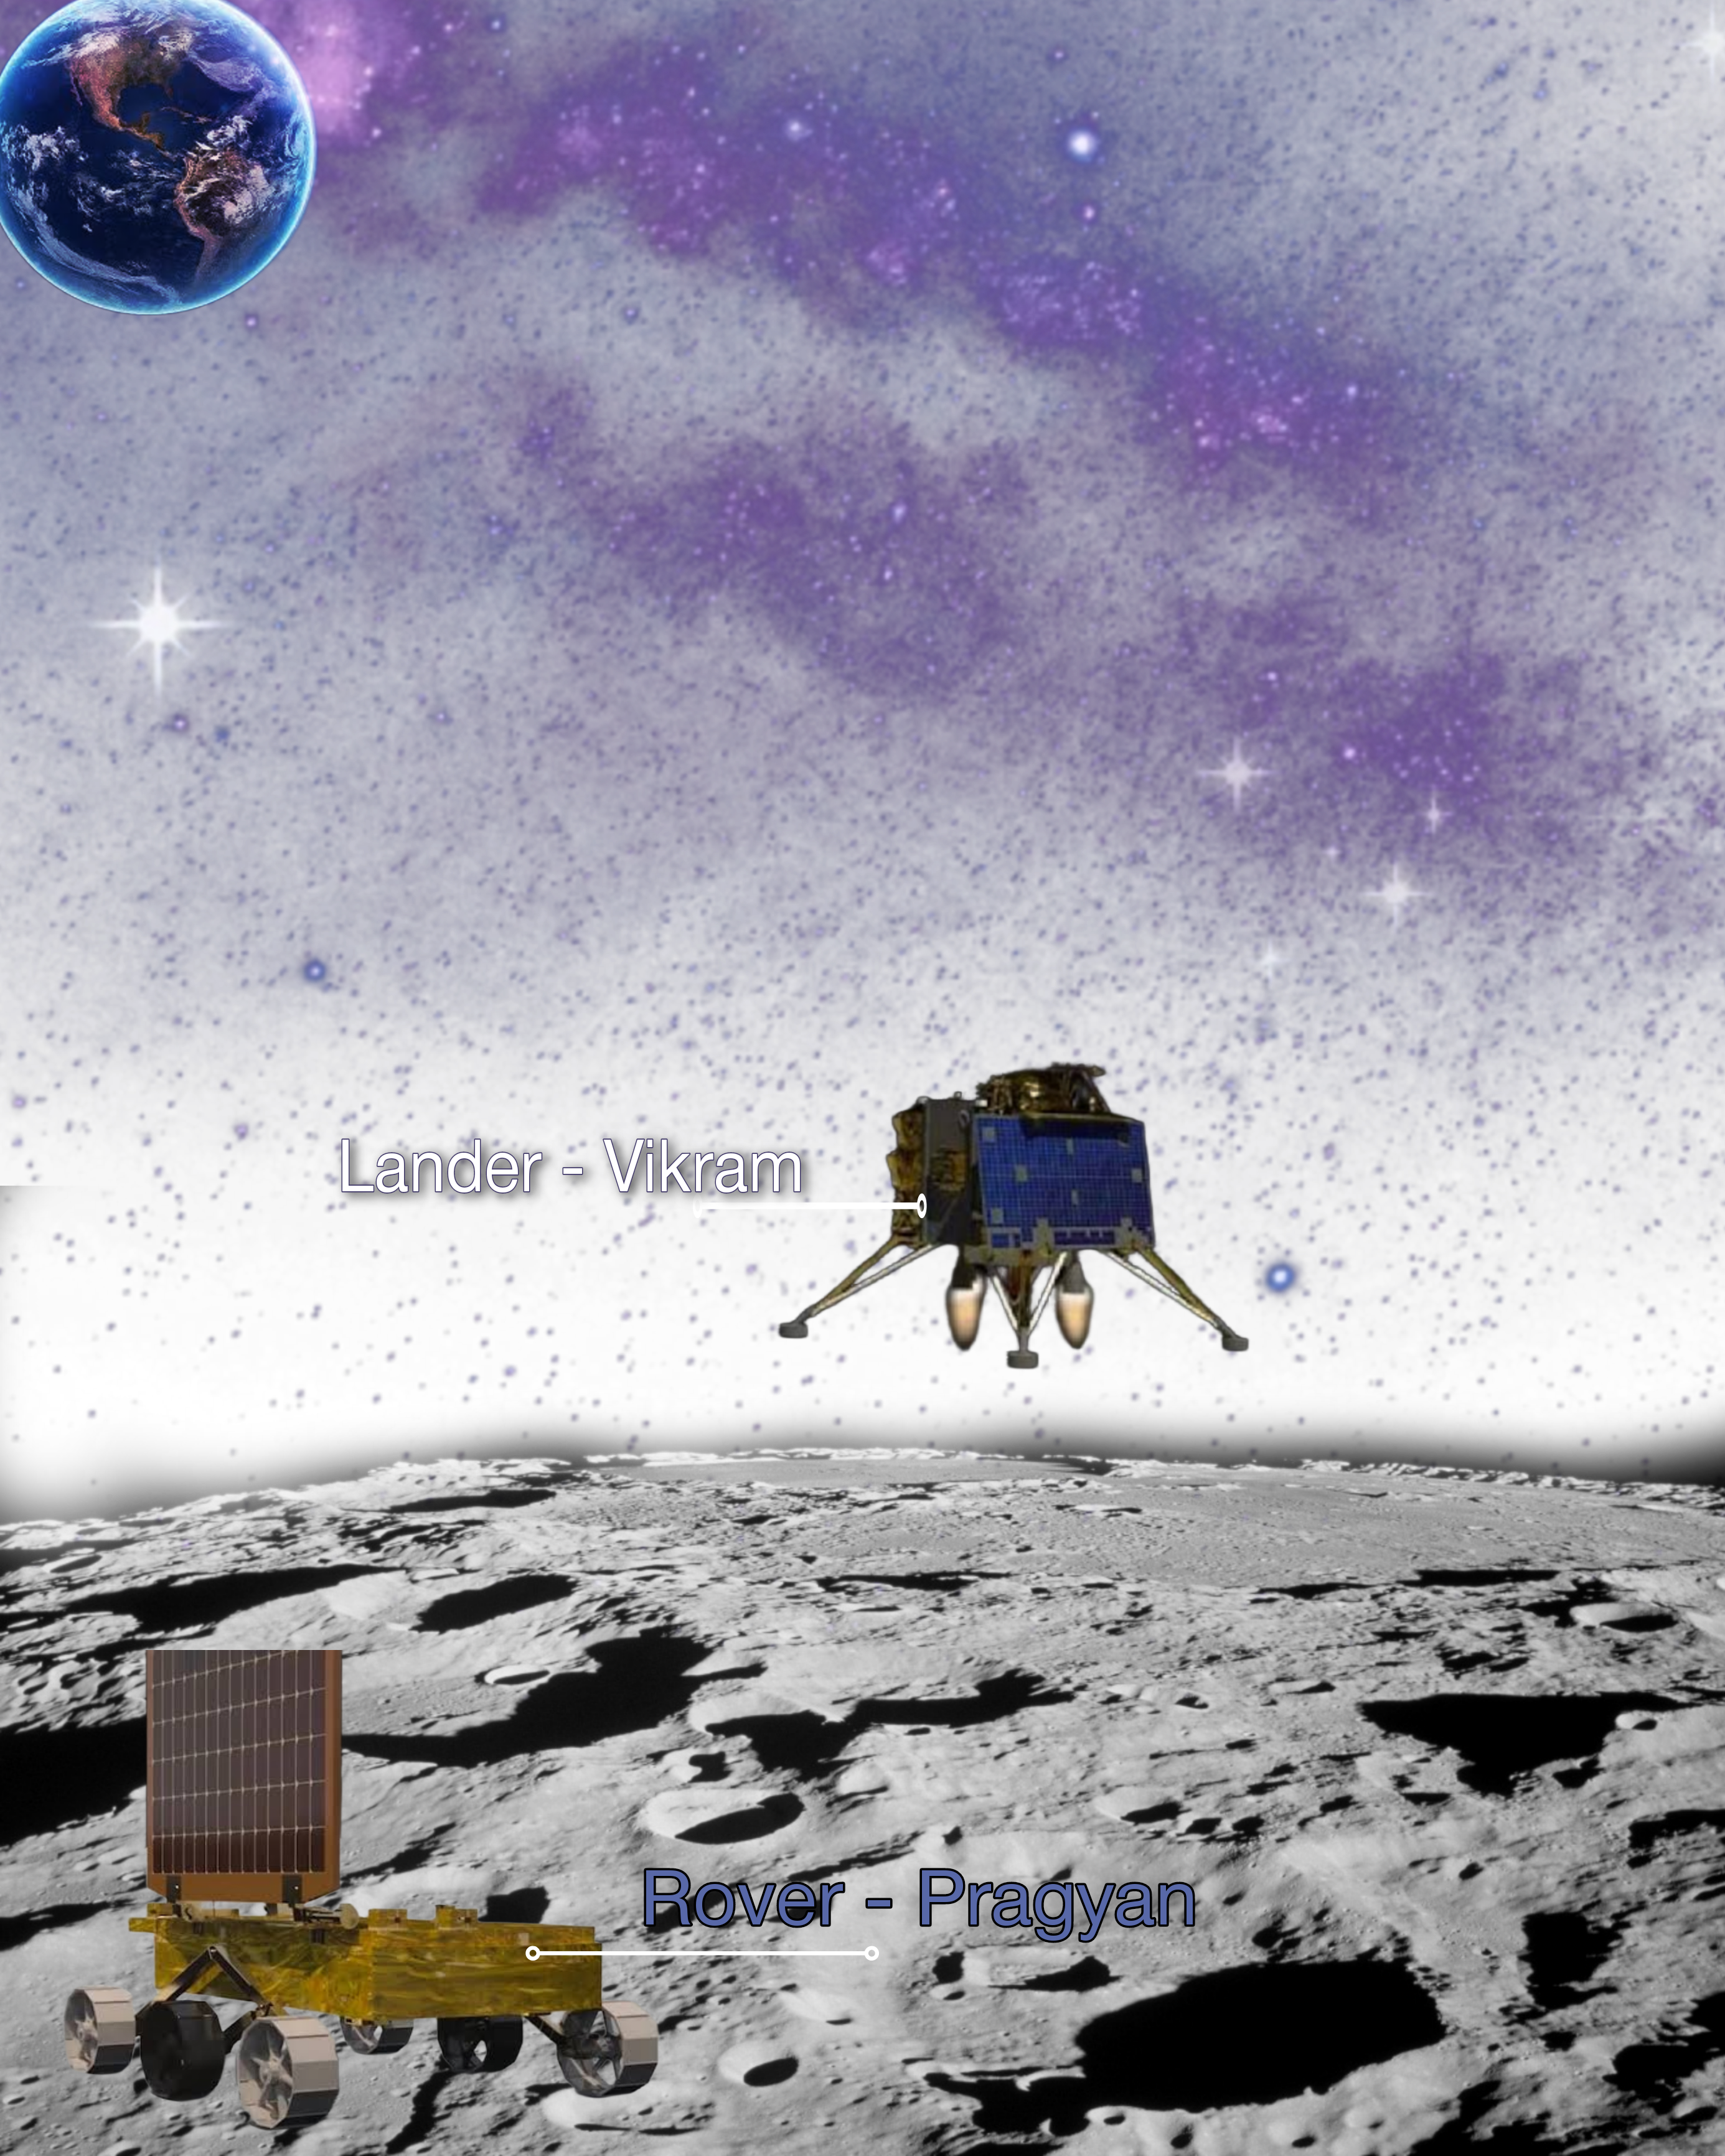 Chandrayan 3 lander rover